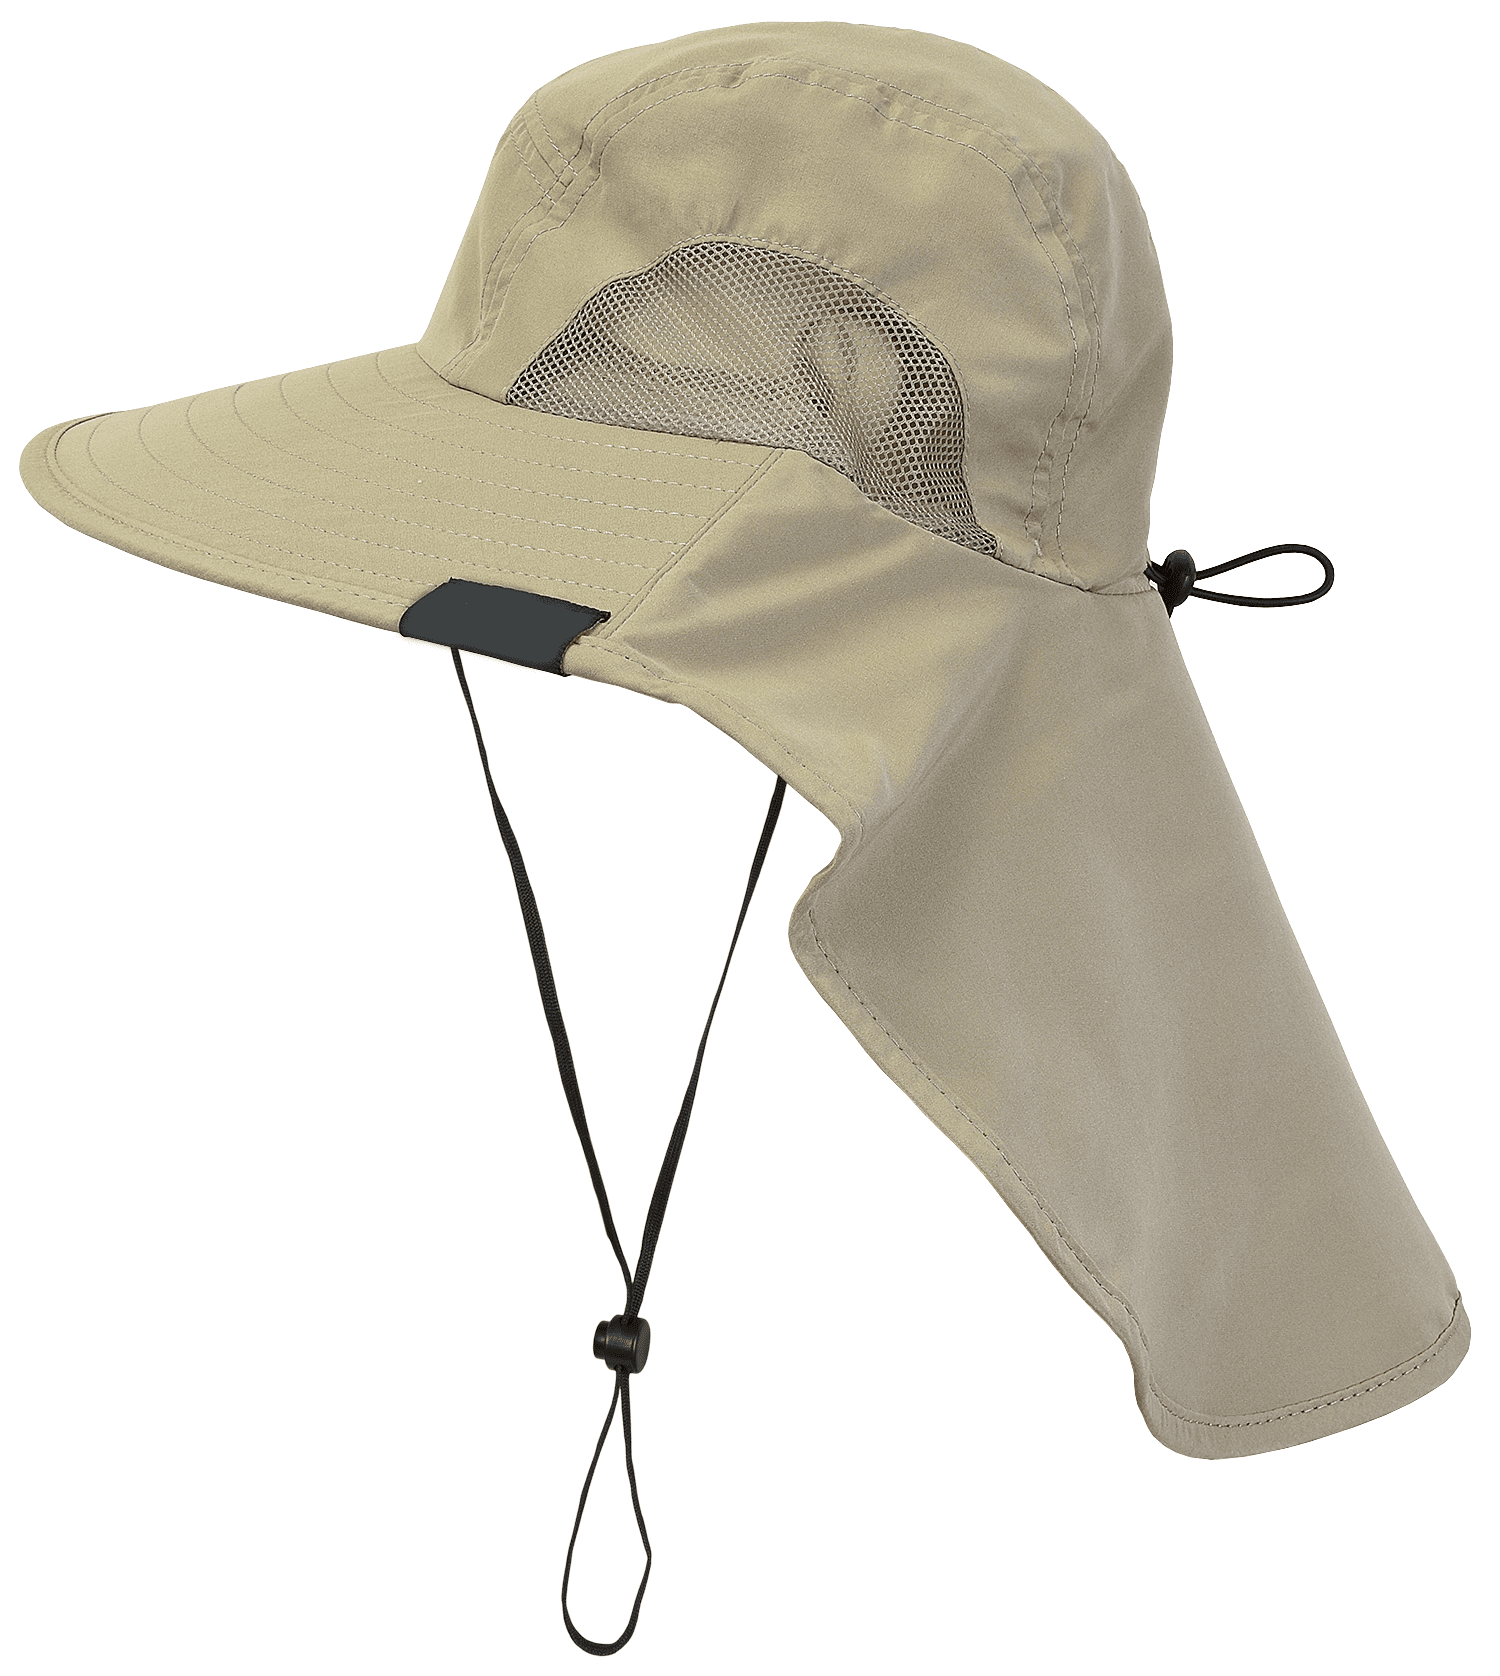 Hiking Cycling Camping Tirrinia Outdoor Sun Protection Fishing Cap with Neck Flap Wide Brim Hat for Men Women Baseball Hunting Backpacking Garden